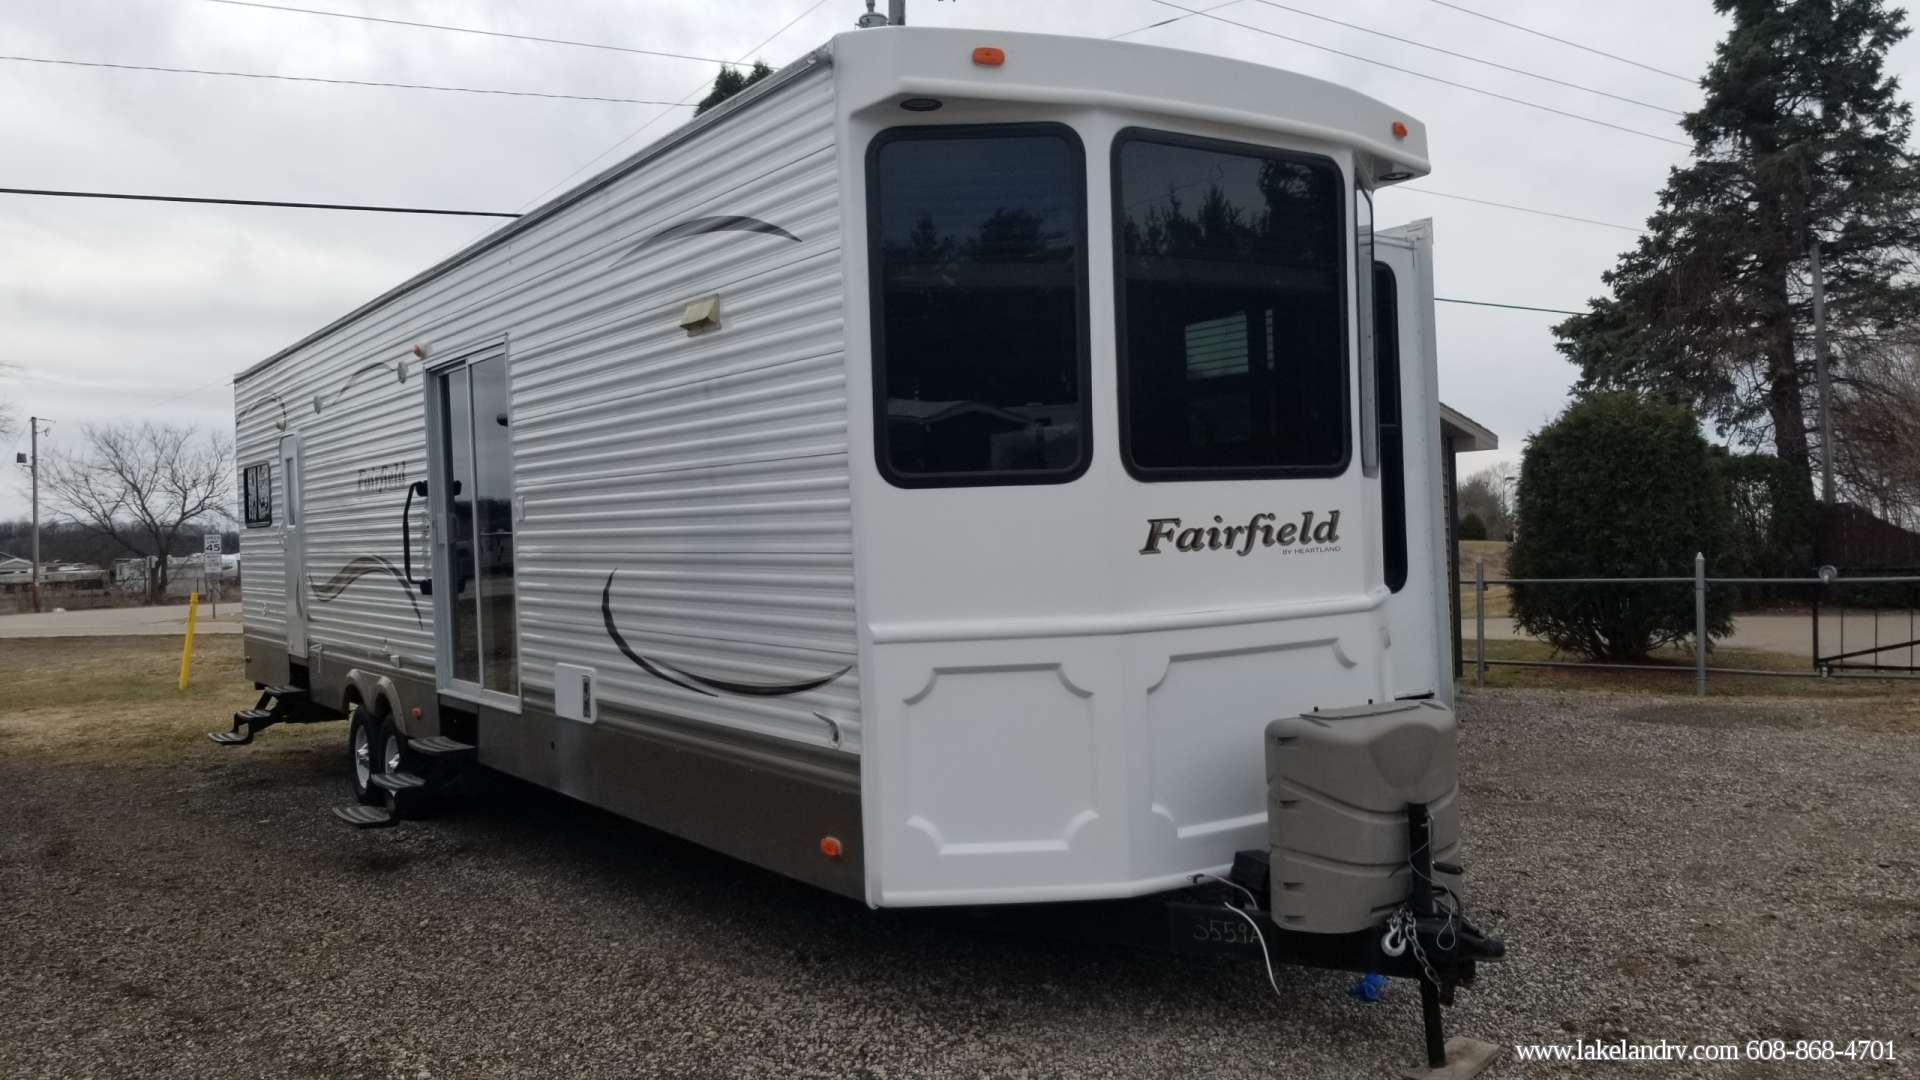 fairfield travel trailers